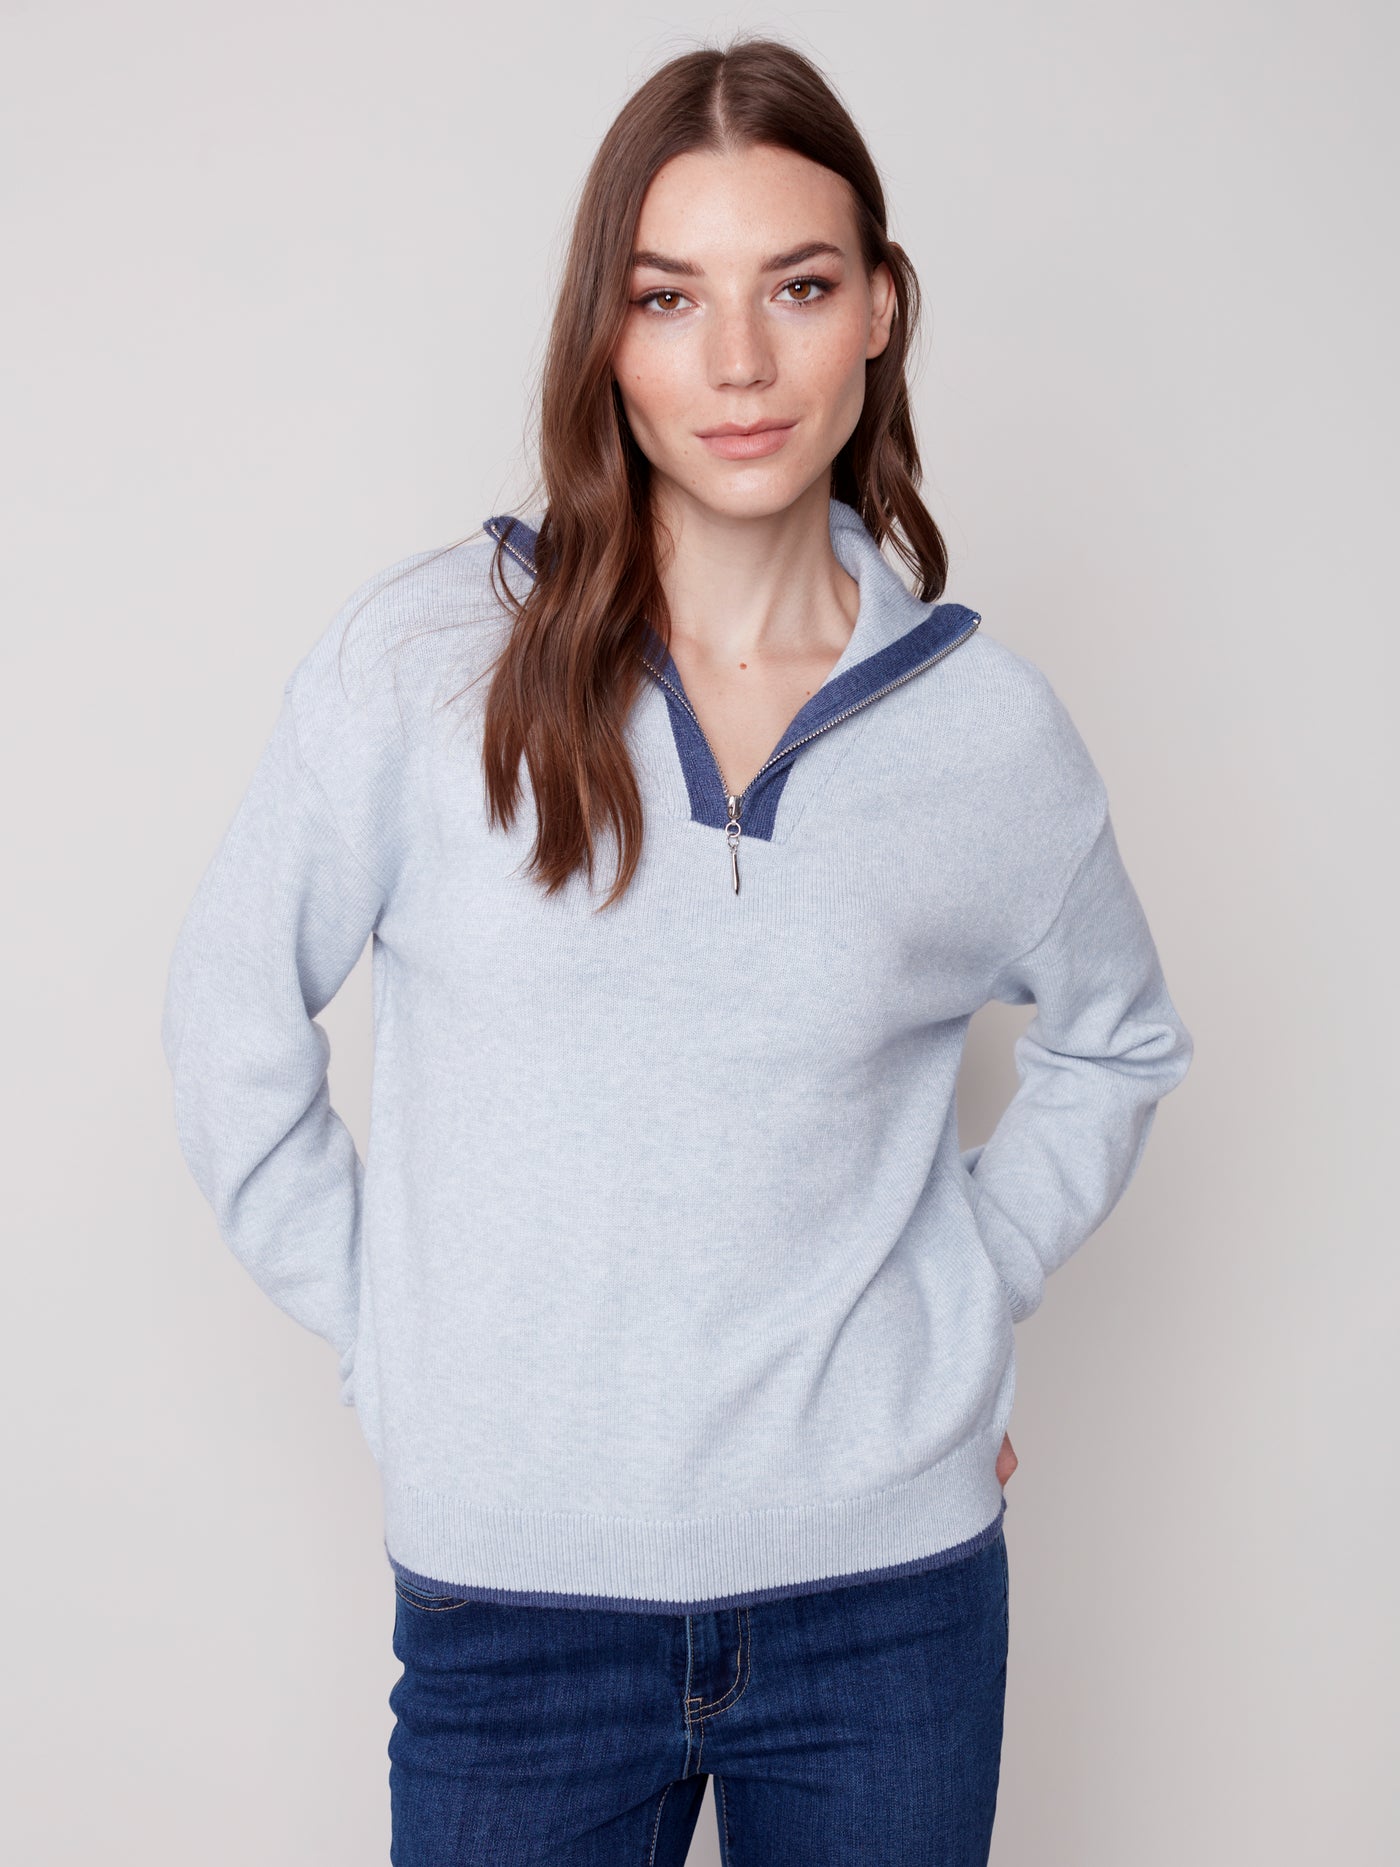 Charlie B Top - Quarter Zip Sweater - Blue Snowflake